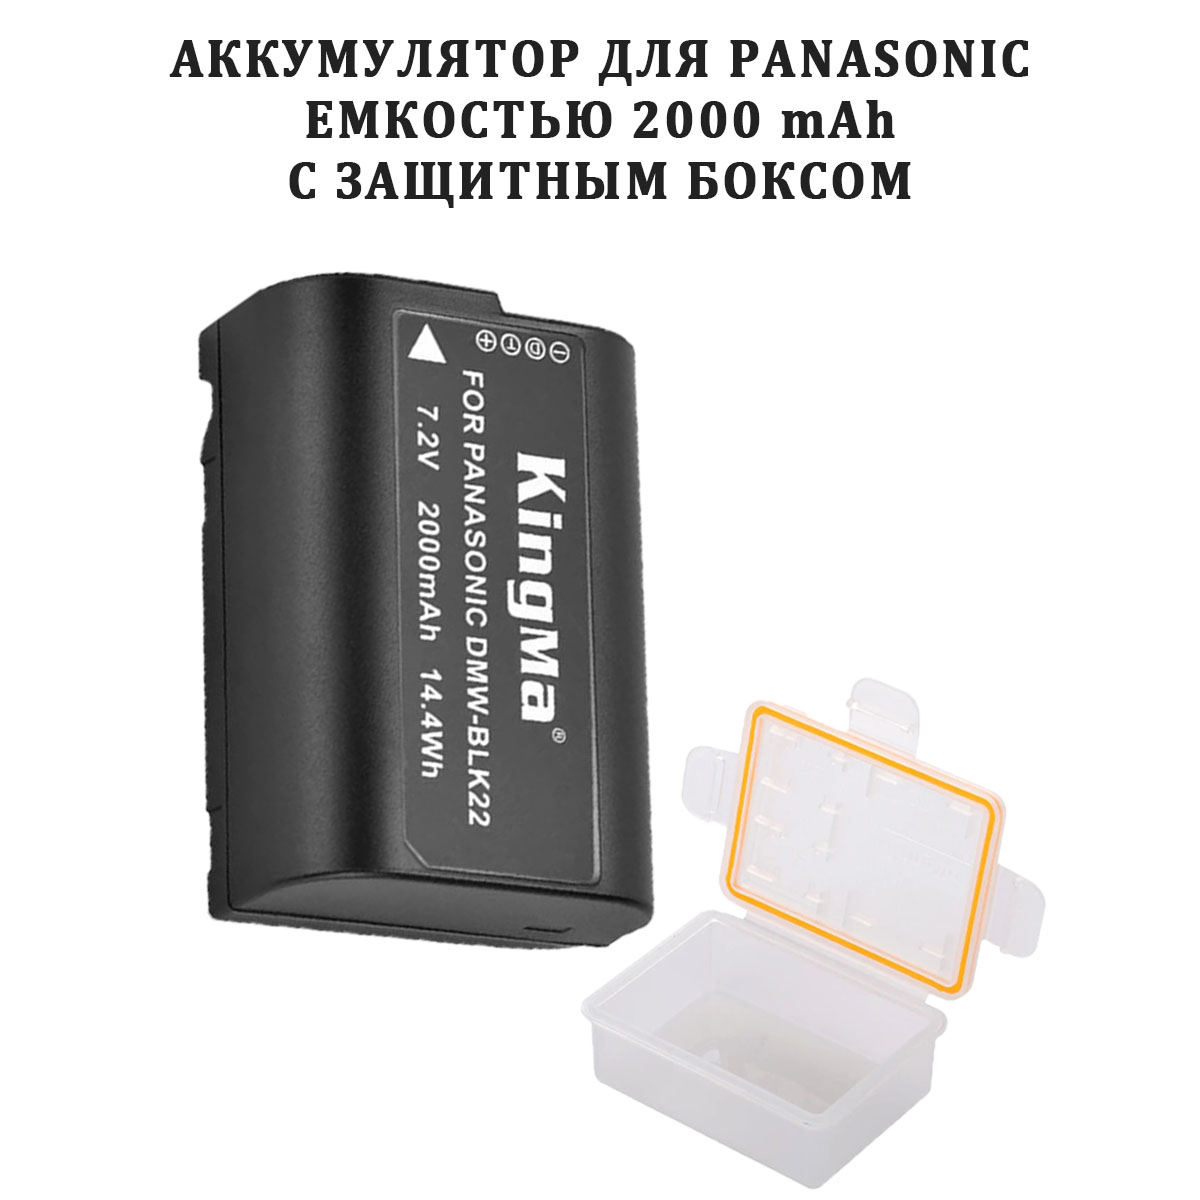 Аккумулятор для видеокамеры KingMa DMW-BLK22 2000 мА/ч для Panasonic